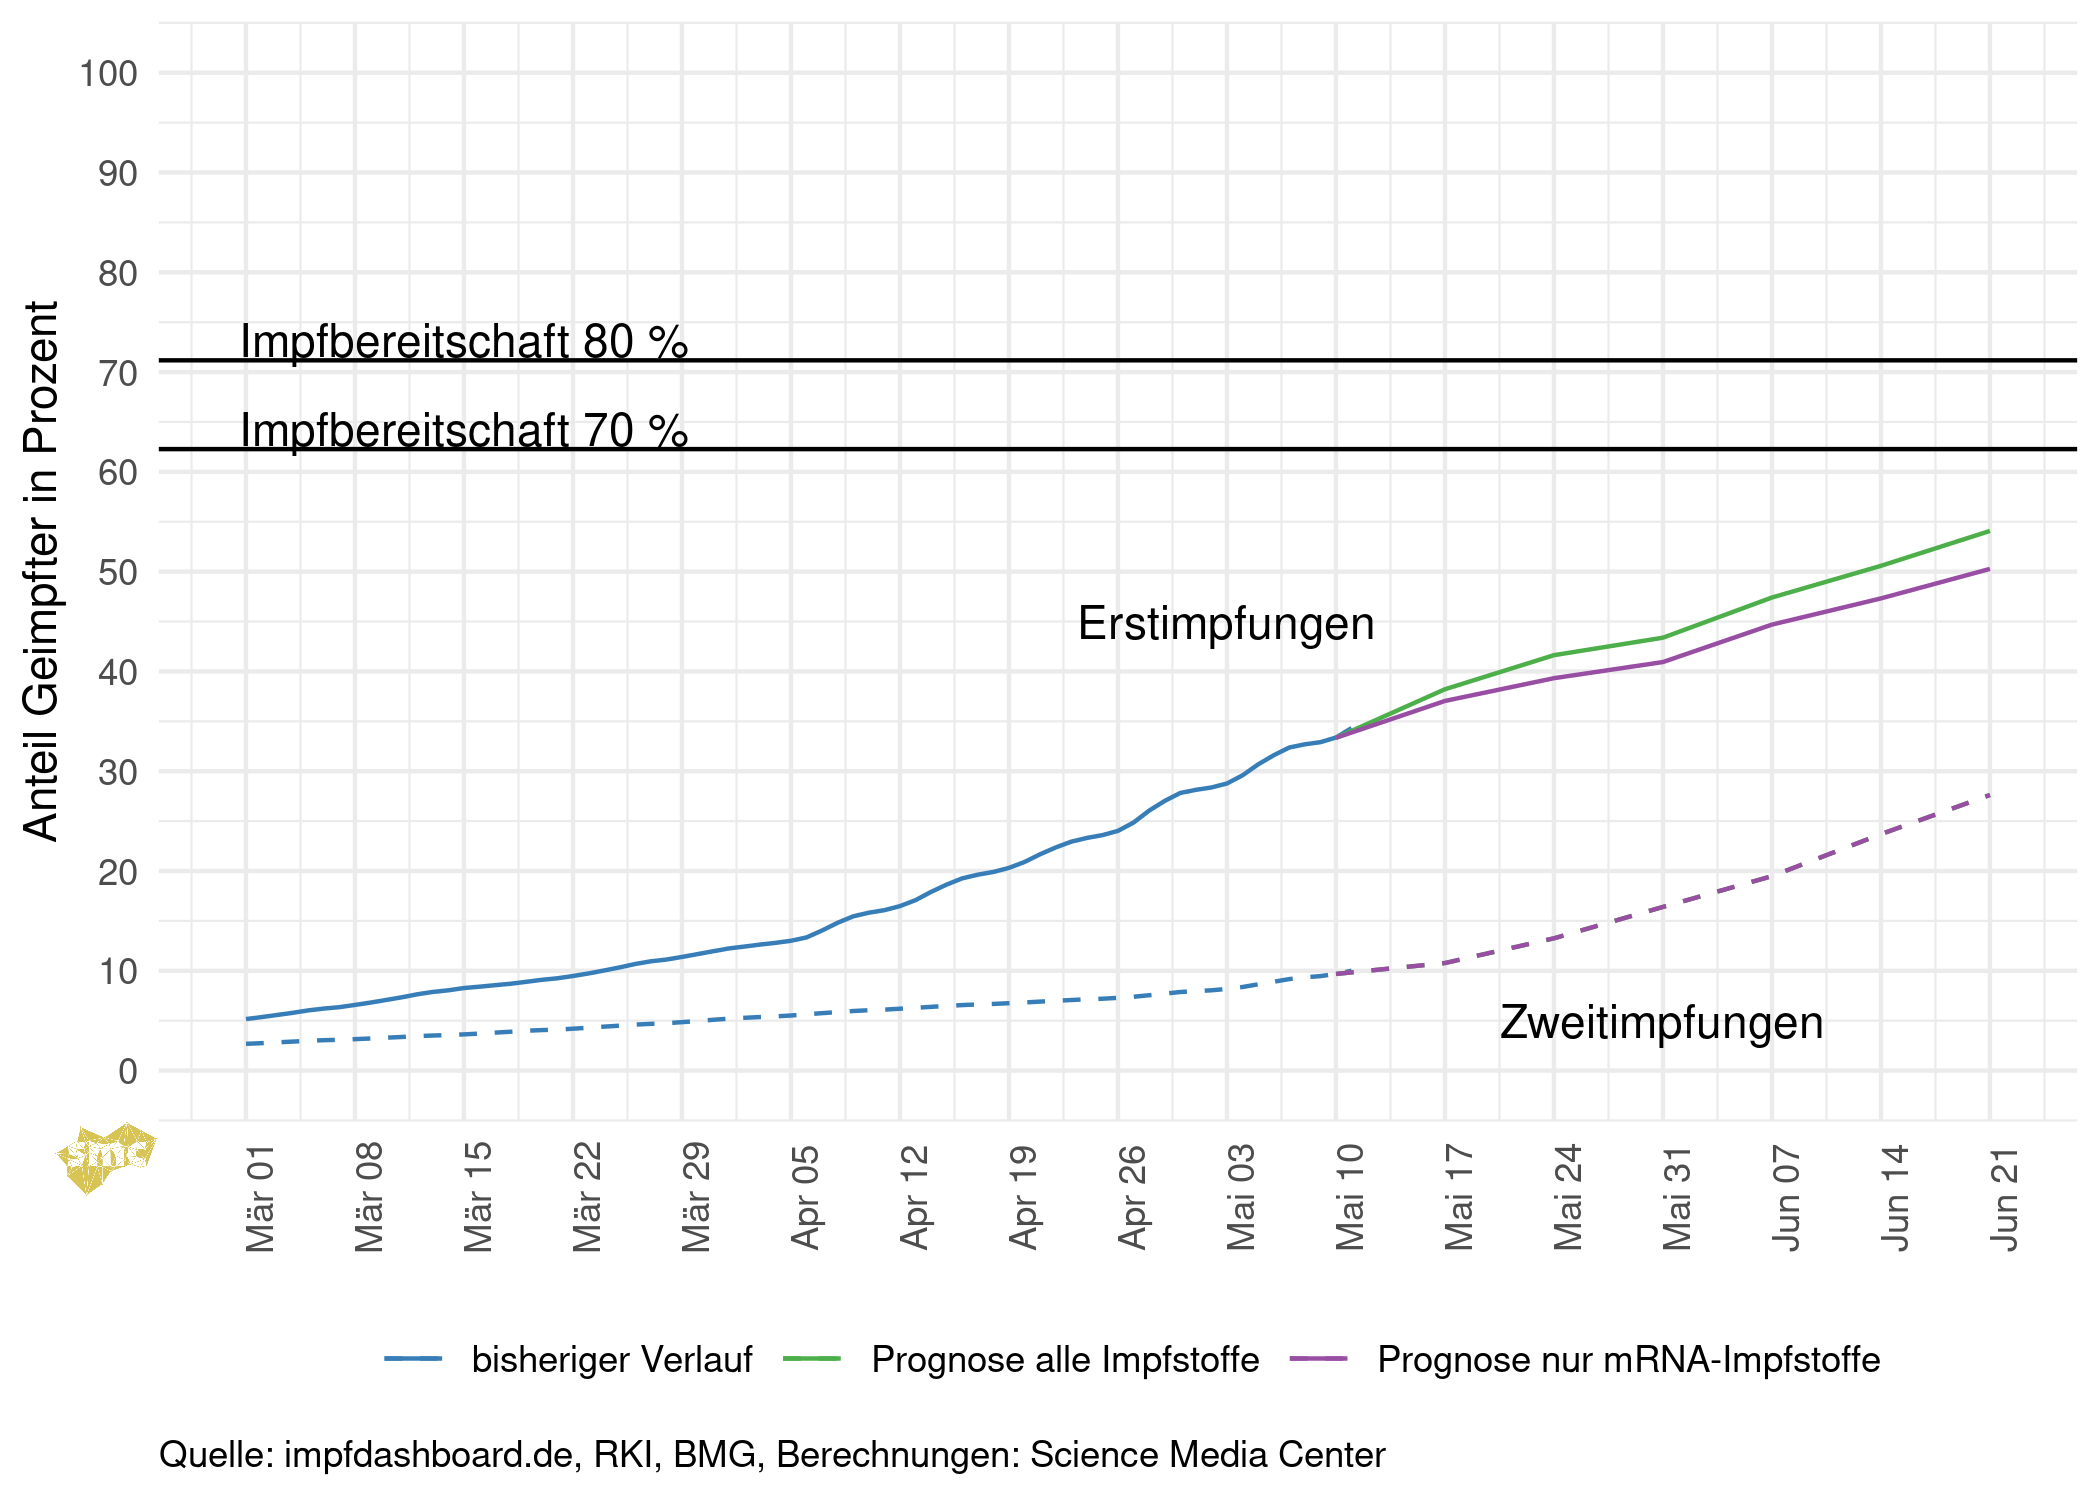 2021-05-12_Impfungen_Prognosen.png